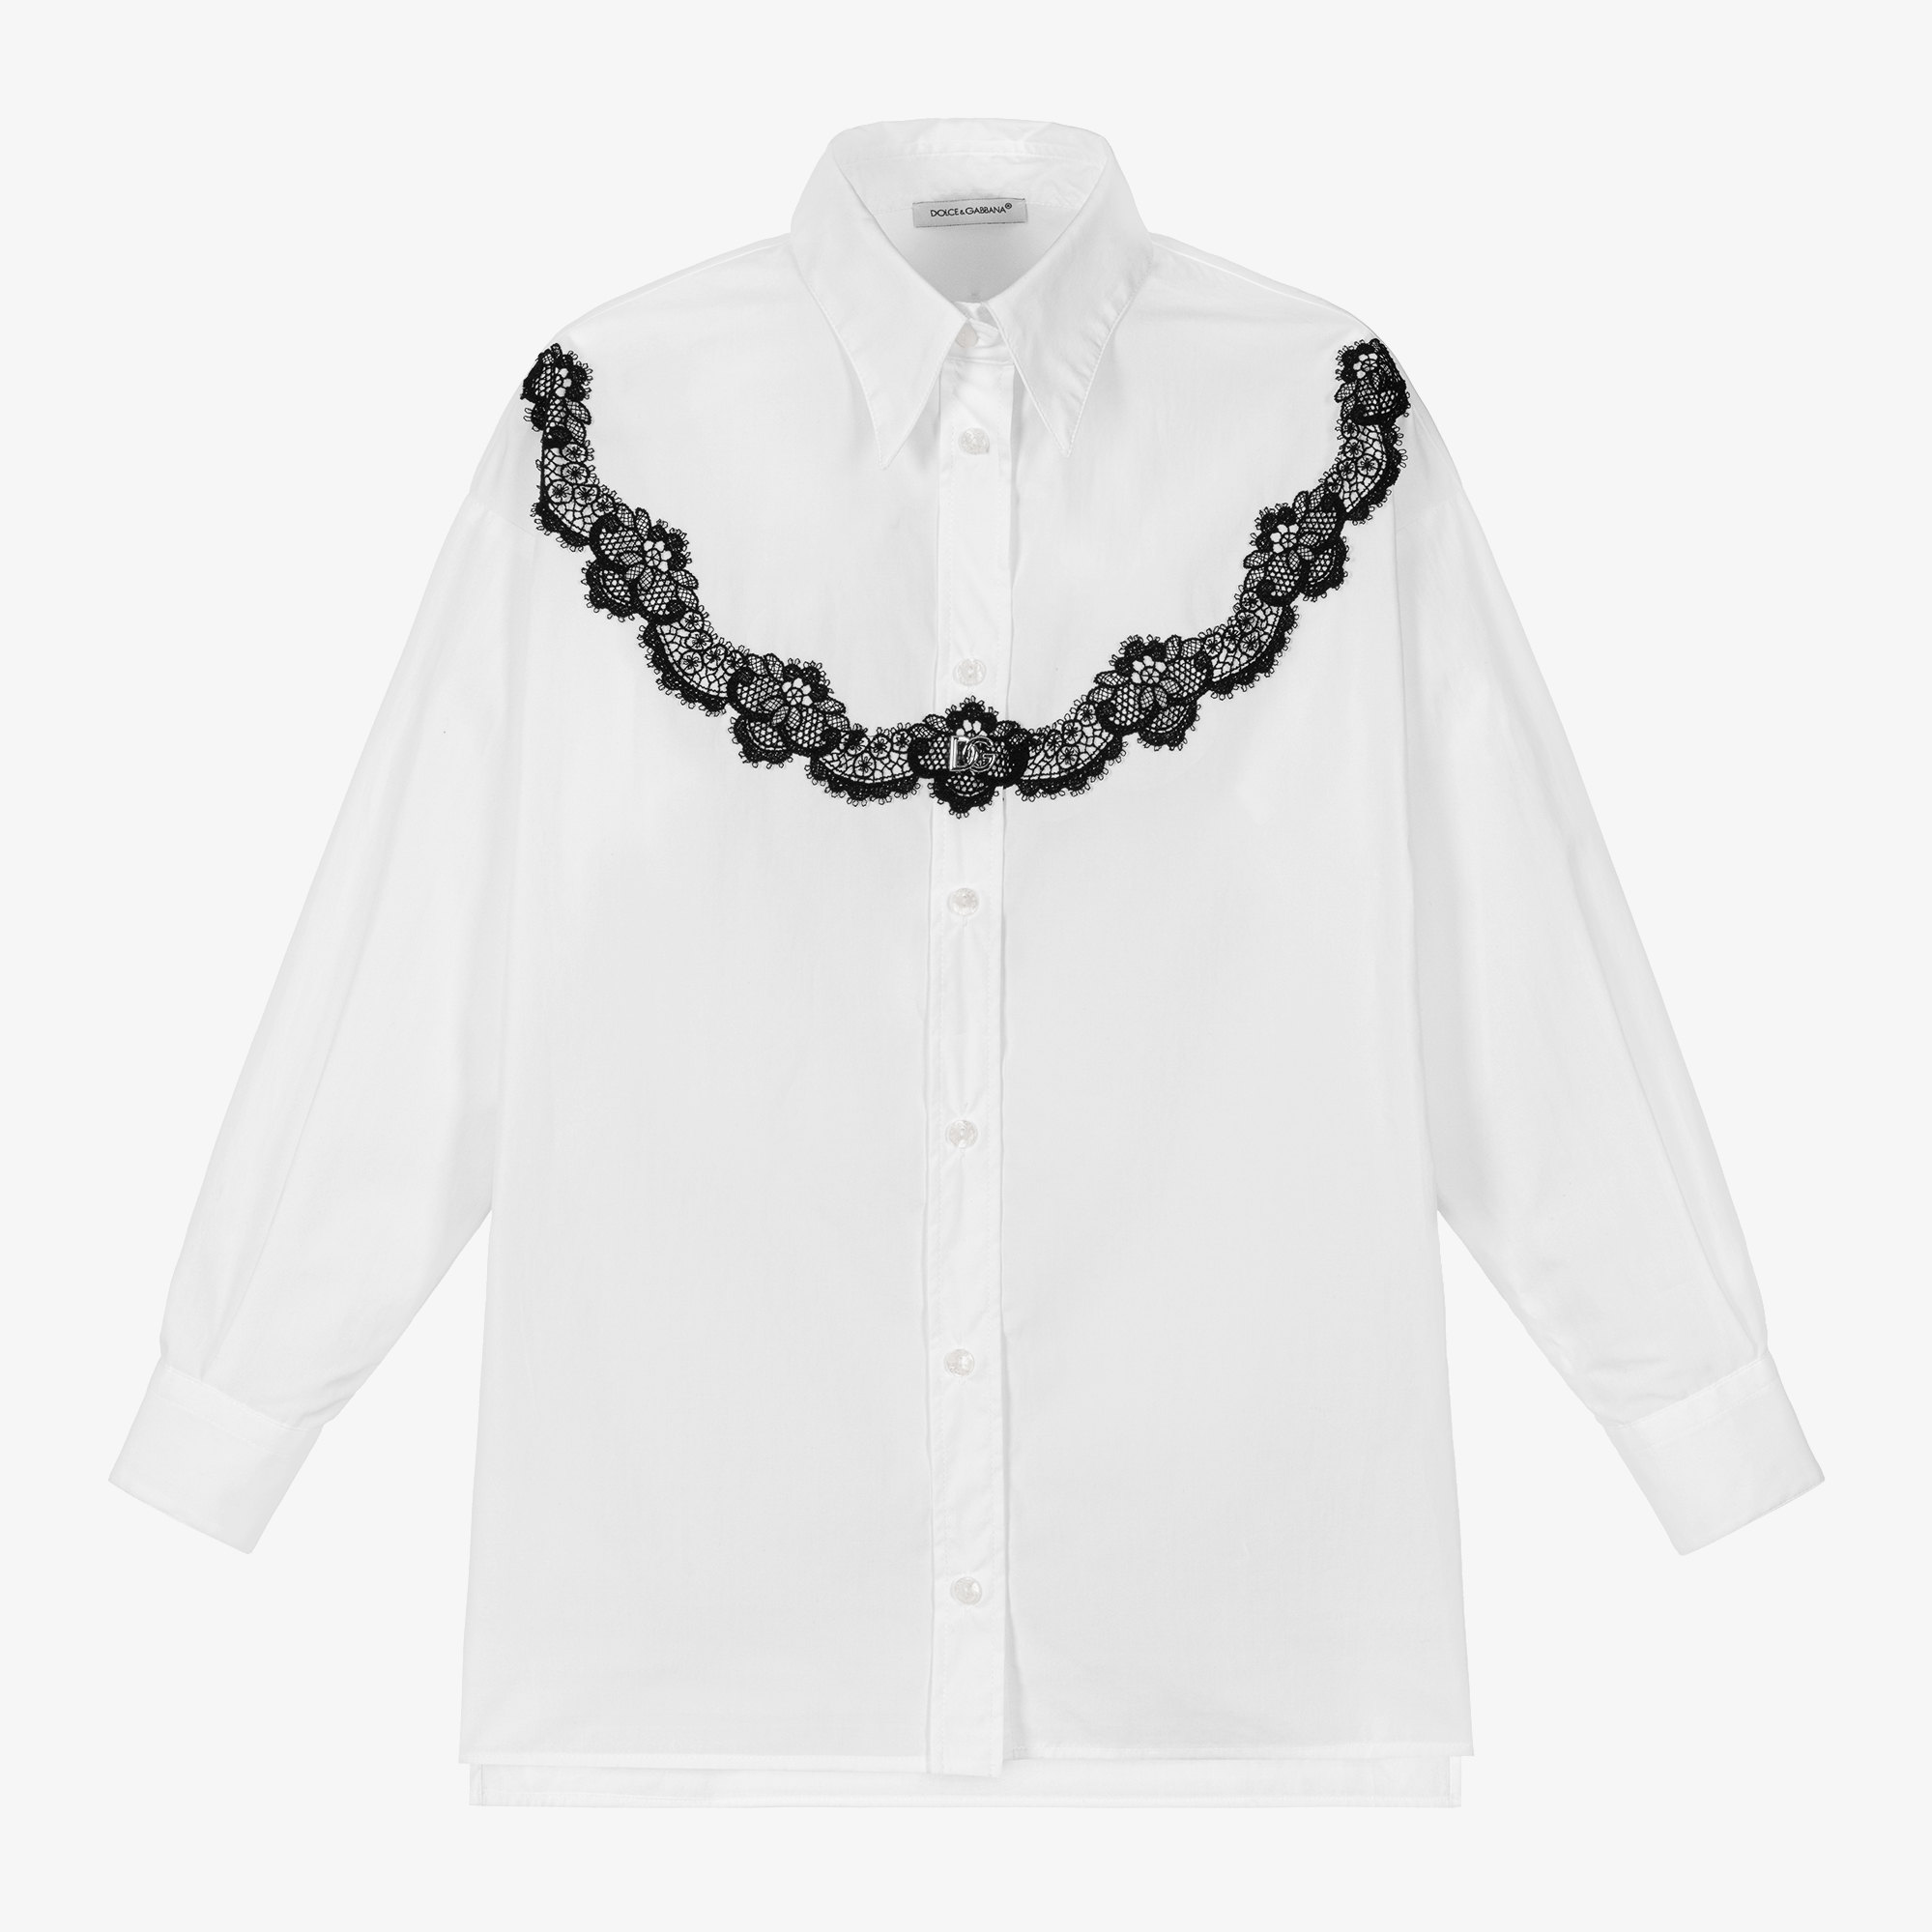 dolce & gabbana white blouse